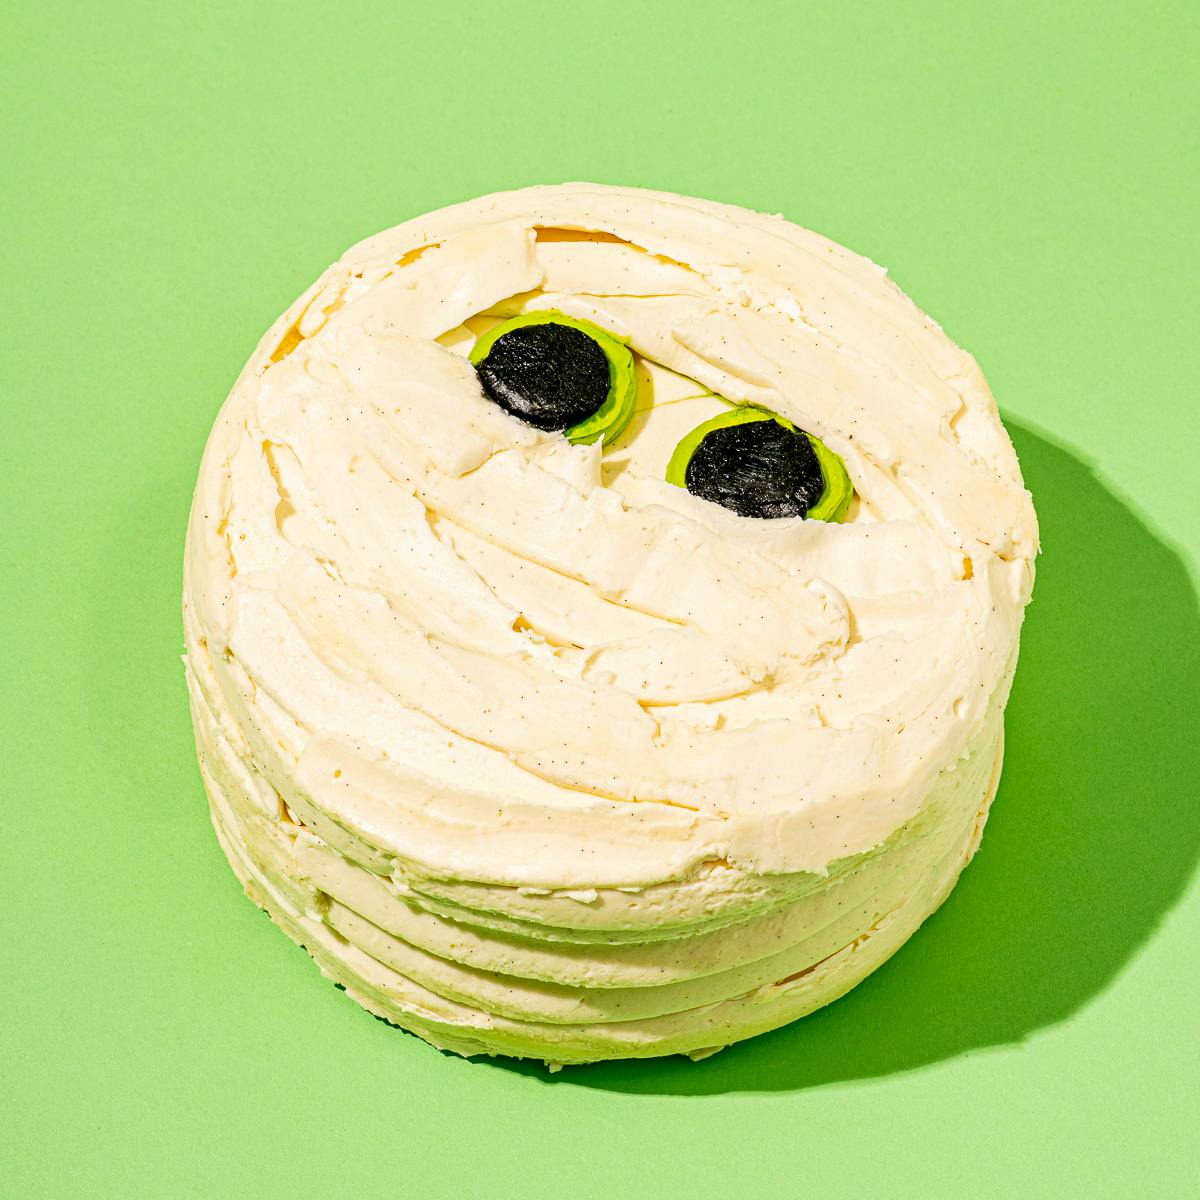 Halloween mummy cake 3d - Decorated Cake by Dana Bakker - CakesDecor